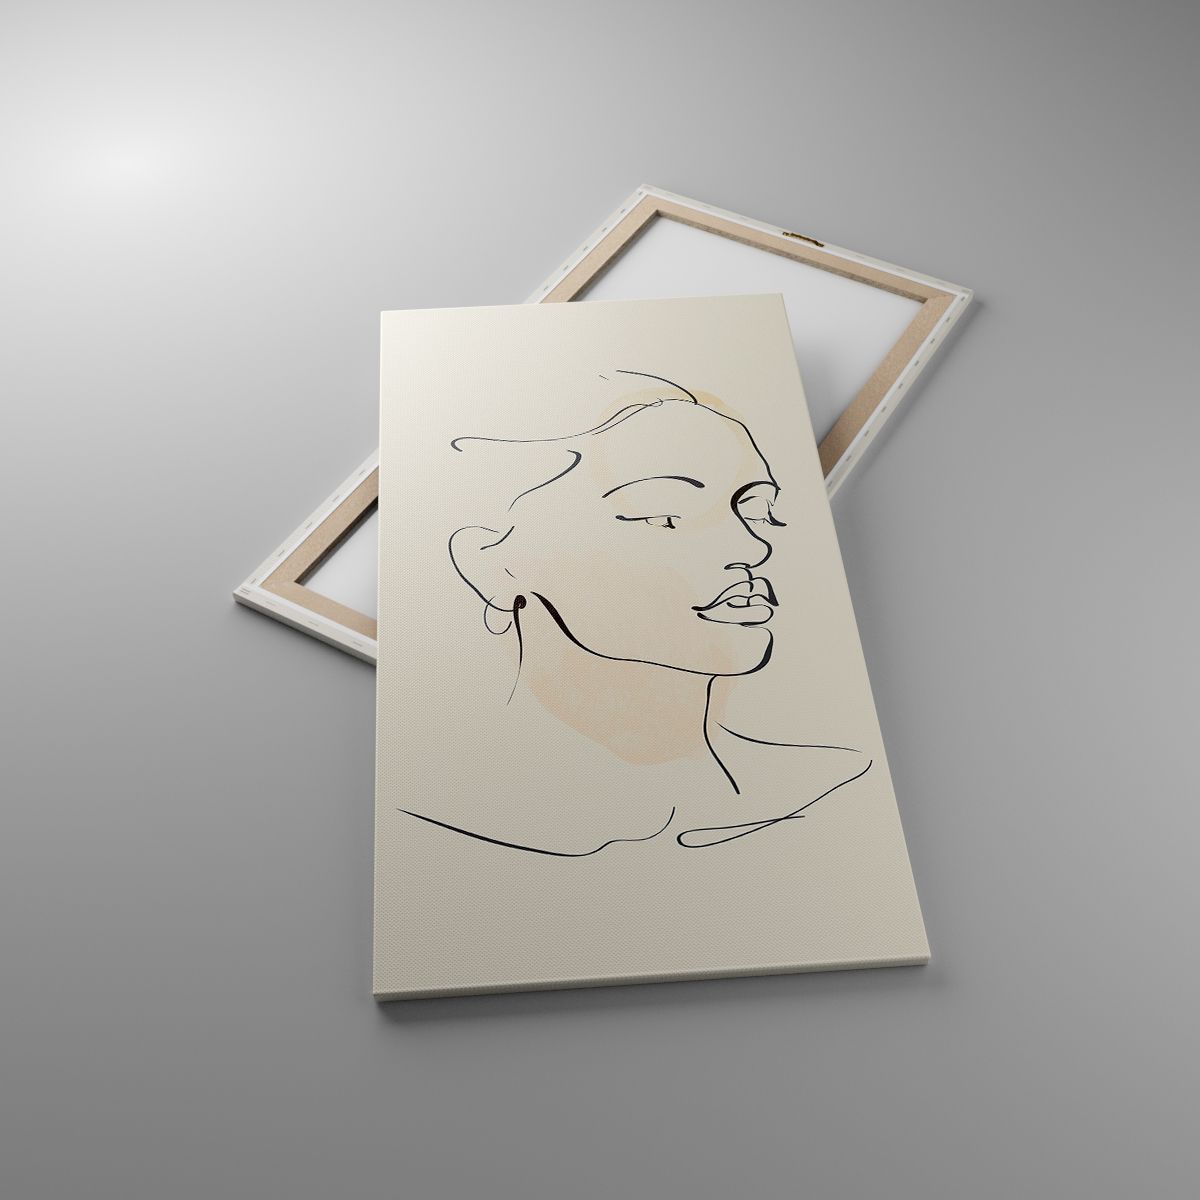 Leinwandbild Abstraktion, Leinwandbild Das Gesicht Der Frau, Leinwandbild Lineart, Leinwandbild Grafik, Leinwandbild Schönheit